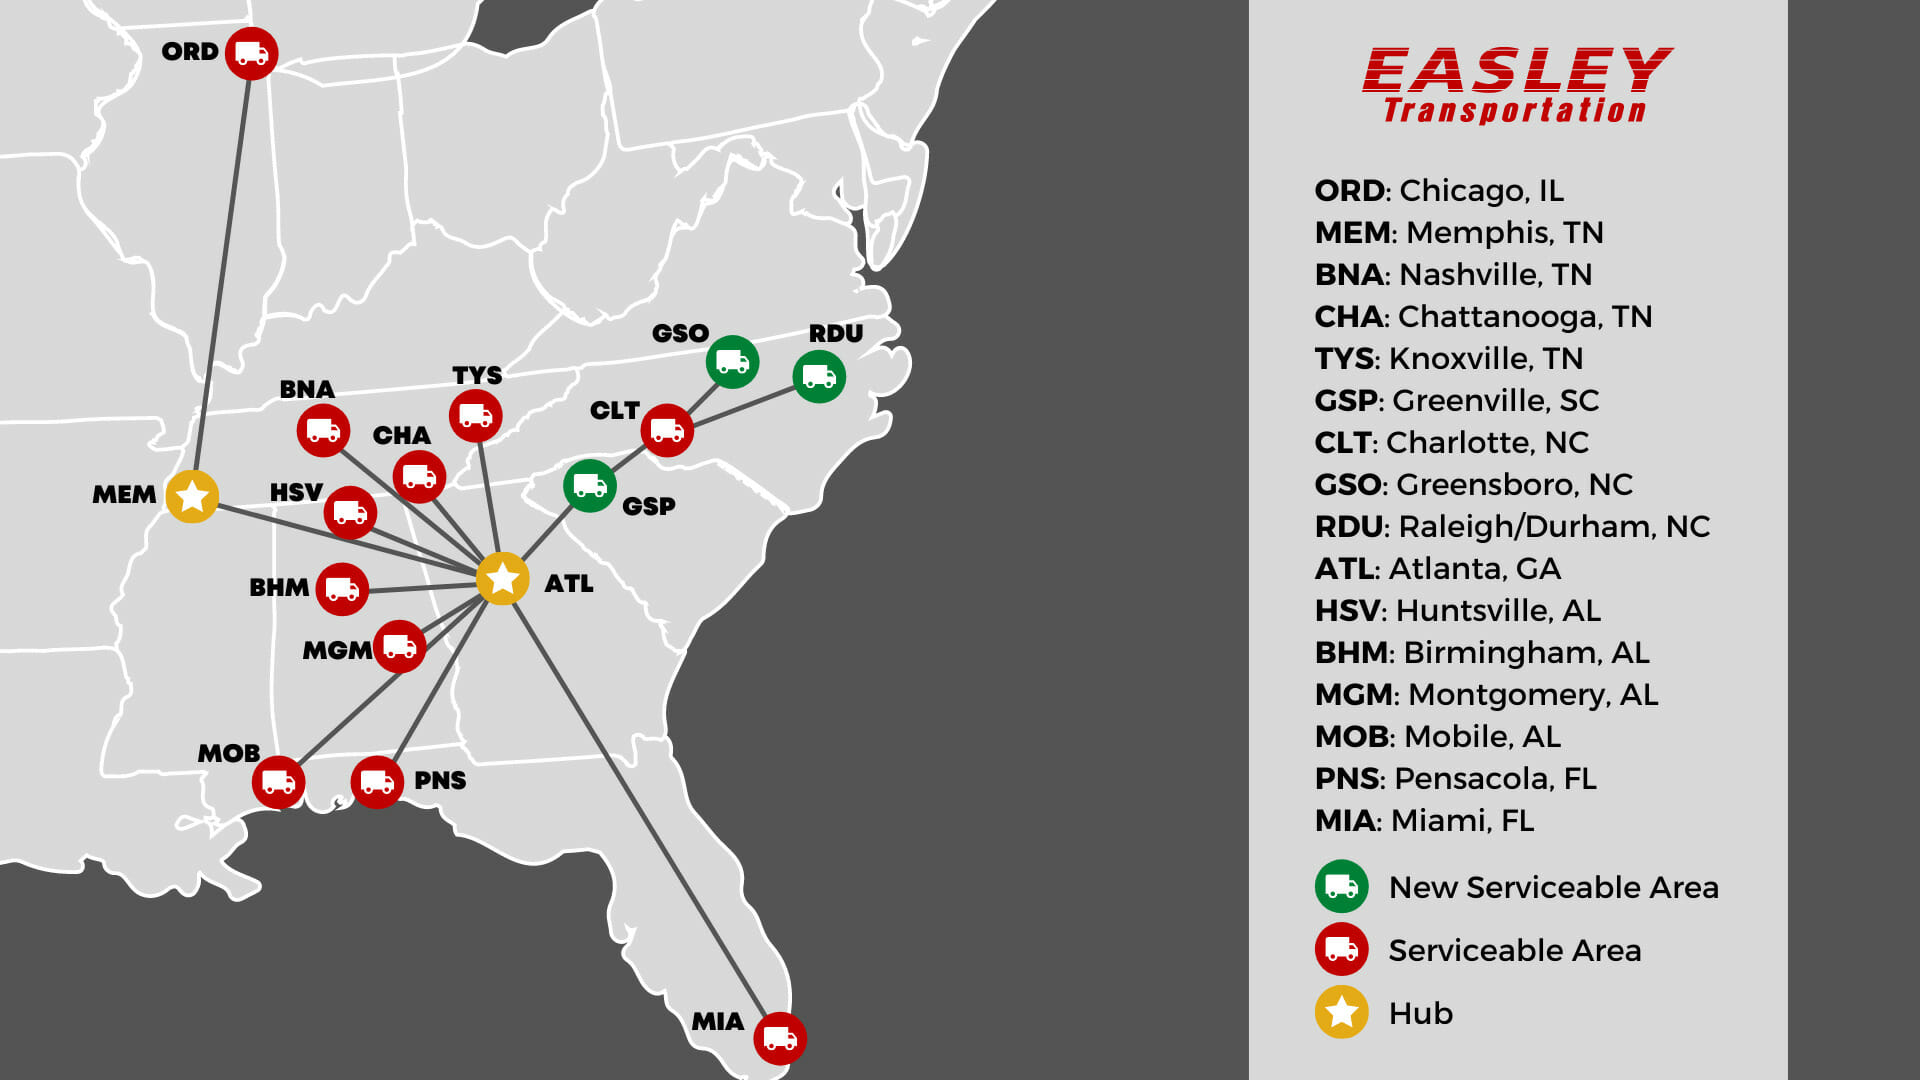 Easley Transportation Linehaul Network service map